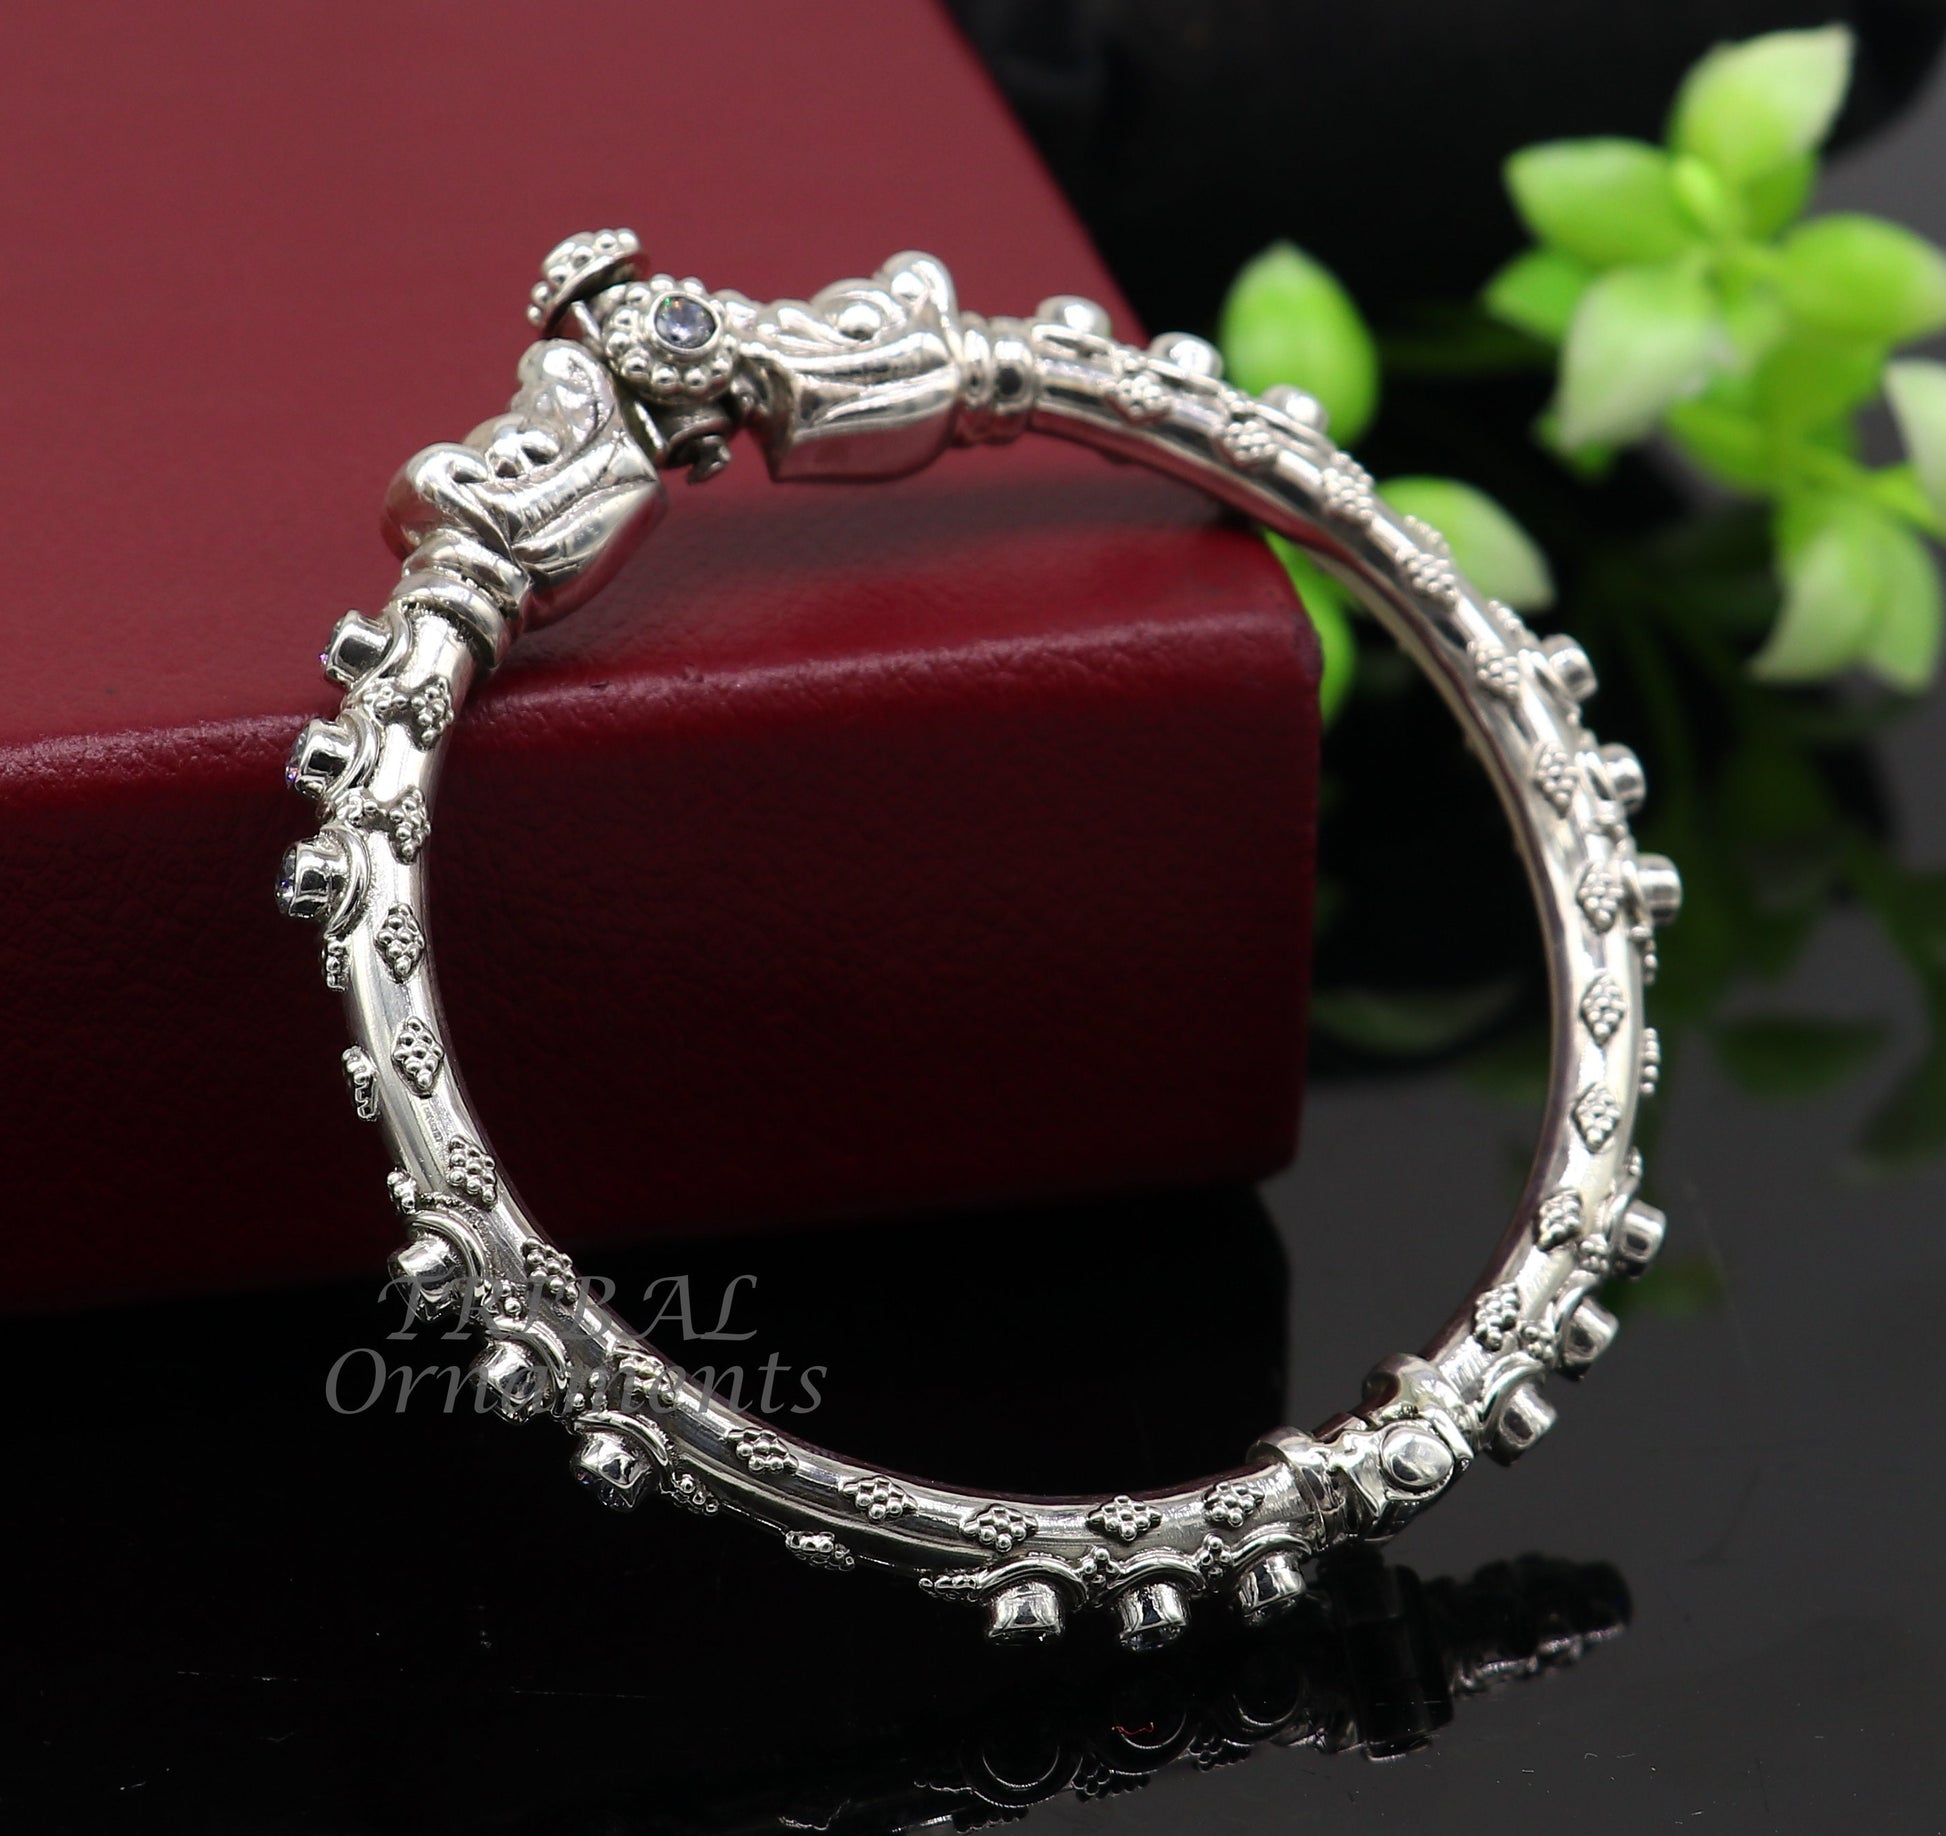 Vintage plain shiny design handmade 925 sterling silver amazing Elephant face bangle bracelet kada unisex customized wrist jewelry nsk625 - TRIBAL ORNAMENTS